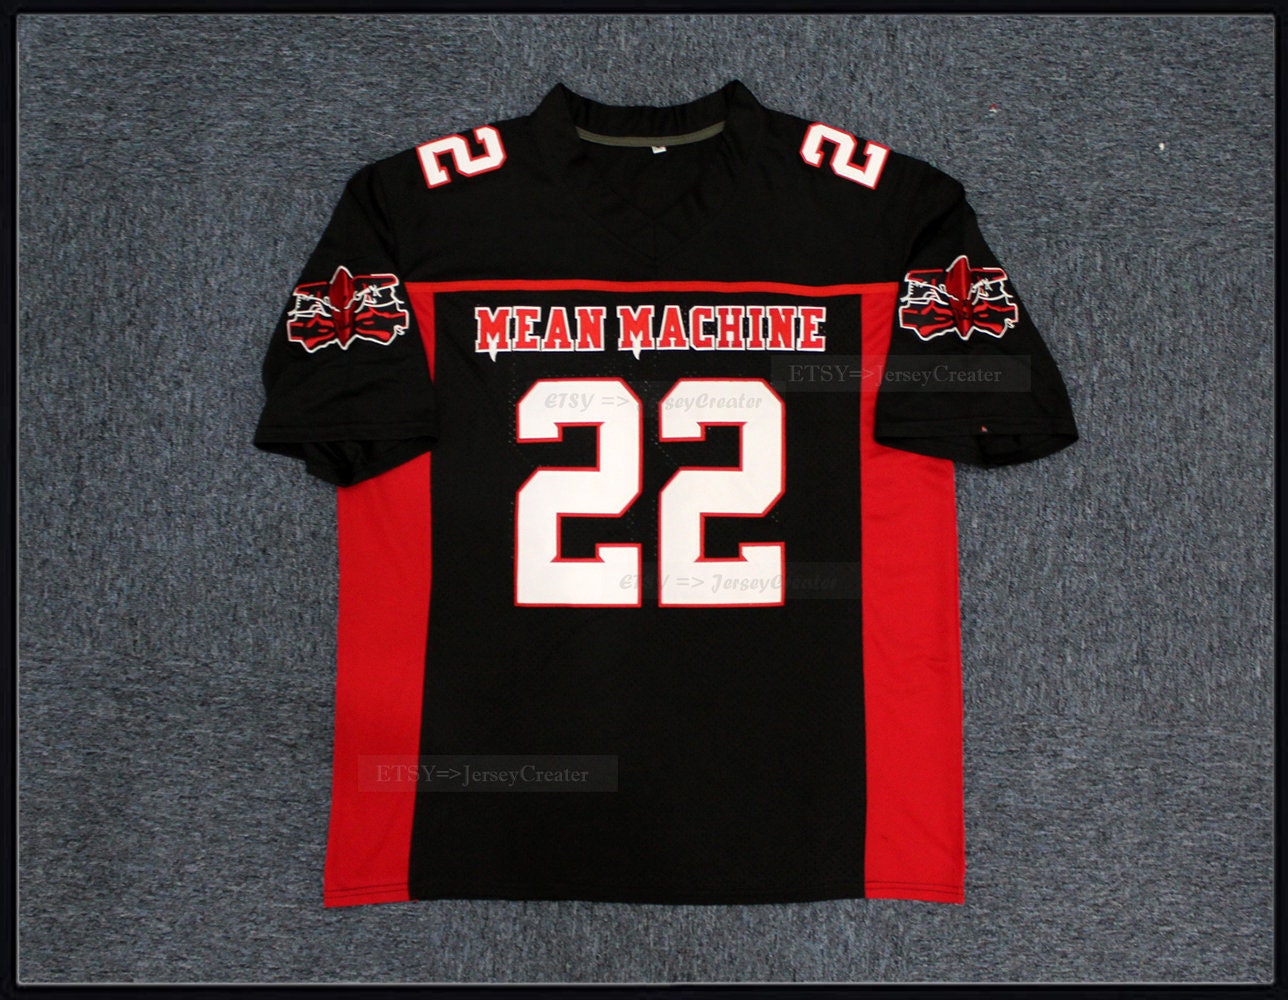 Kekambas Men's #18 Paul Crewe Mean Machine The Longest Yard Movie American Football Jersey Stitched